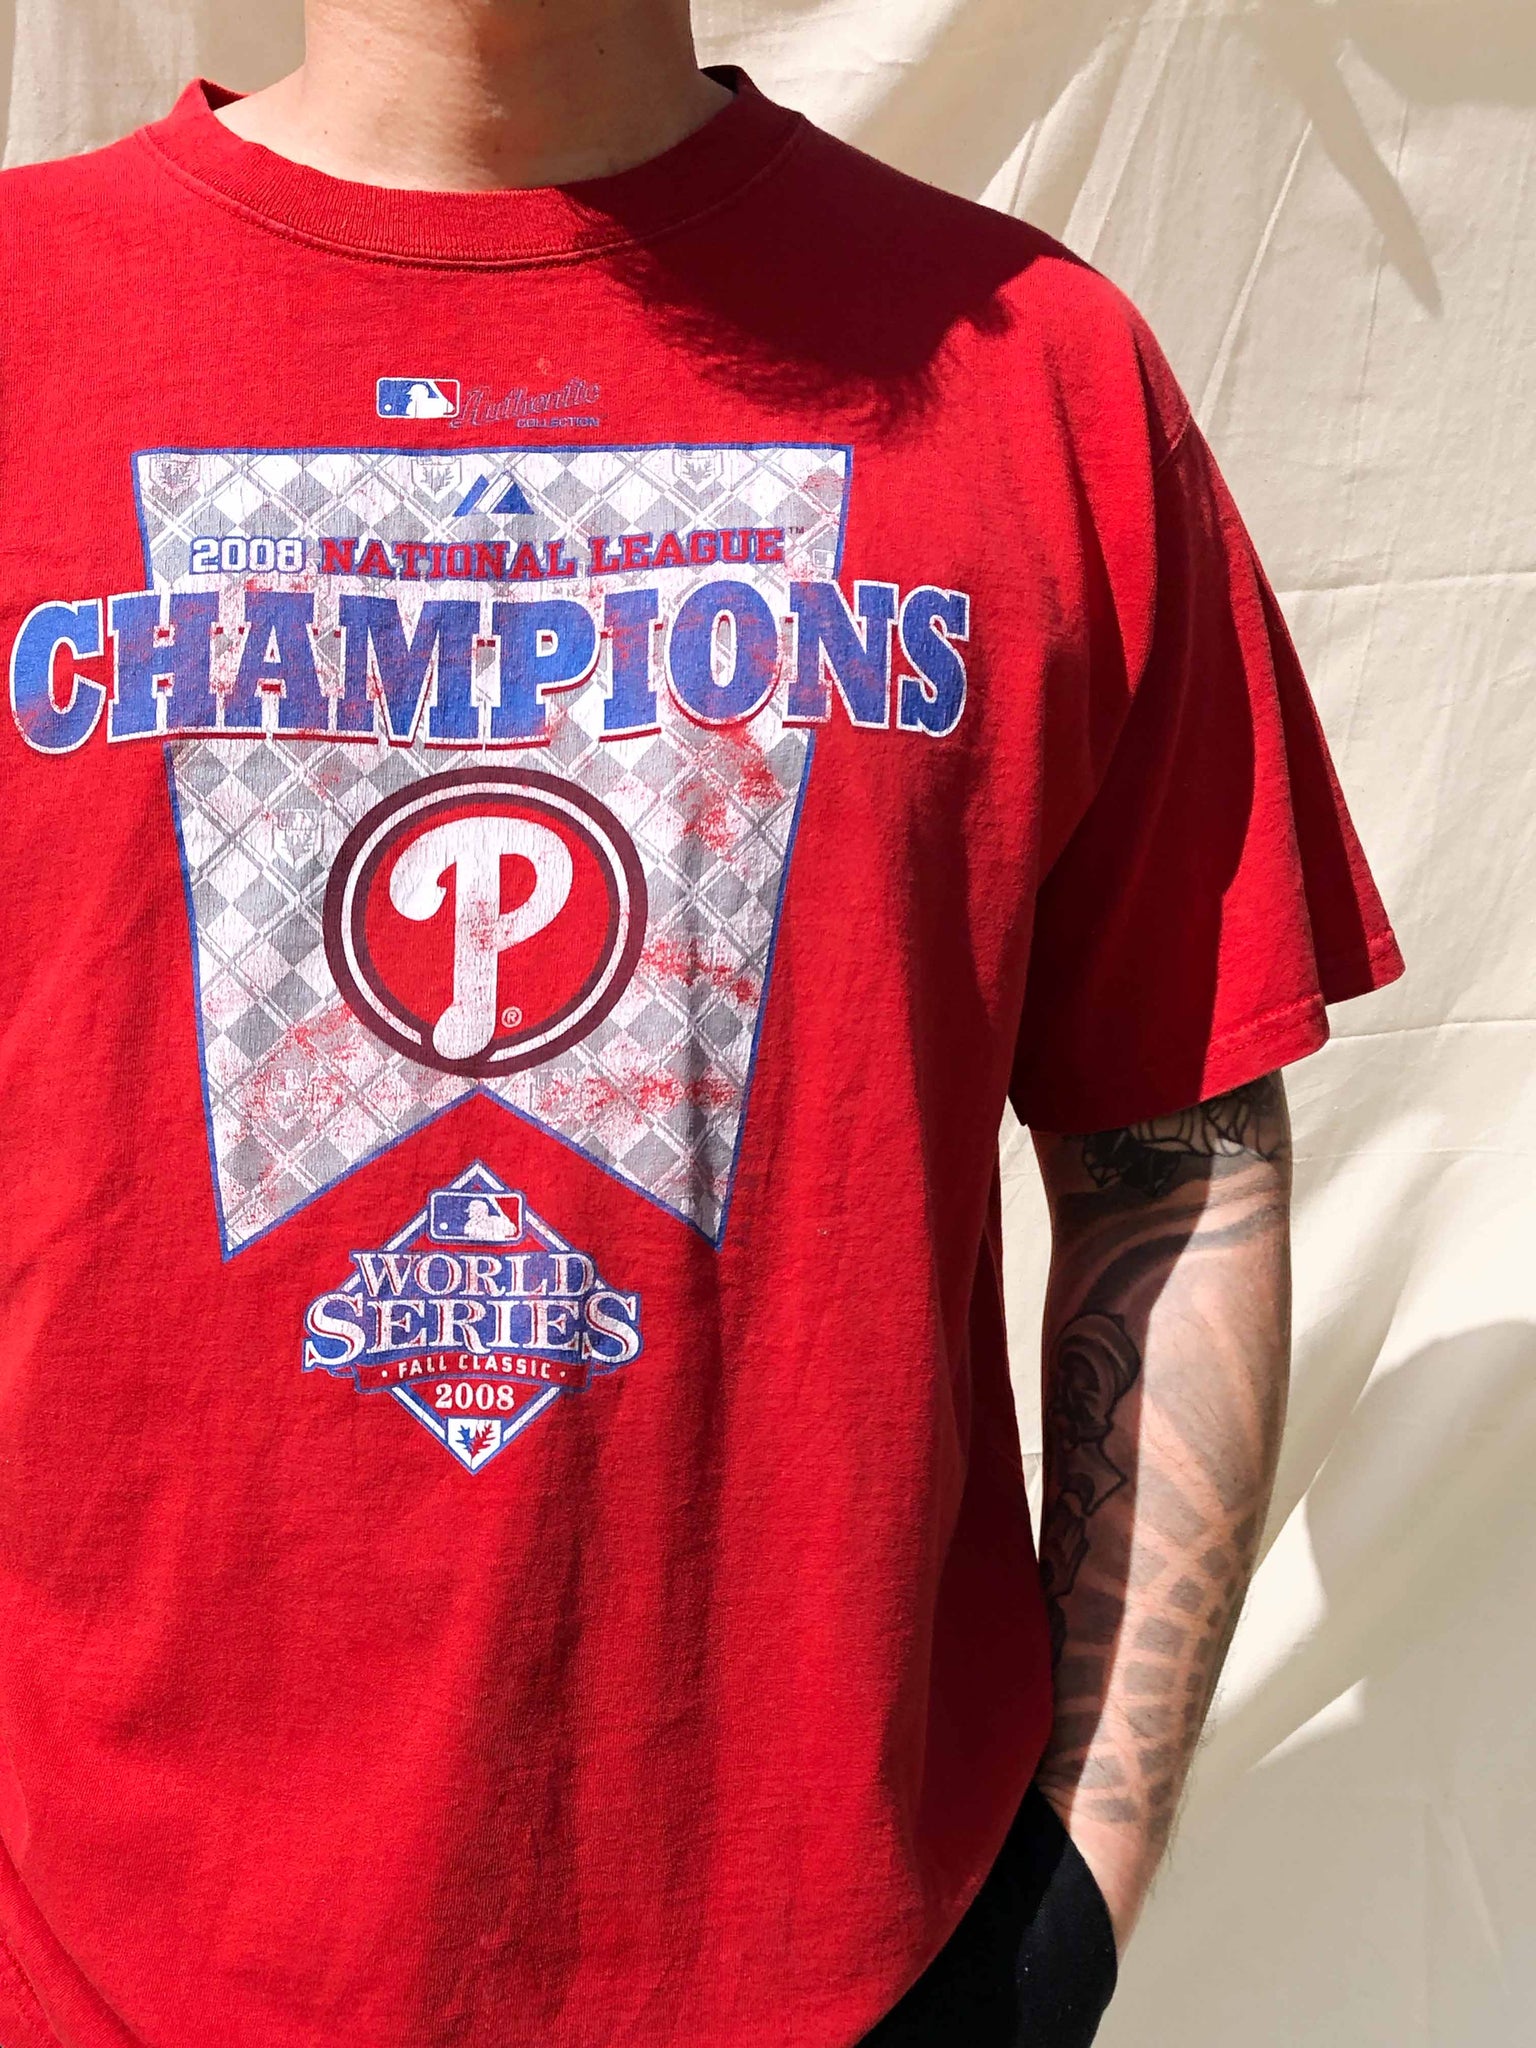 phillies championship shirts